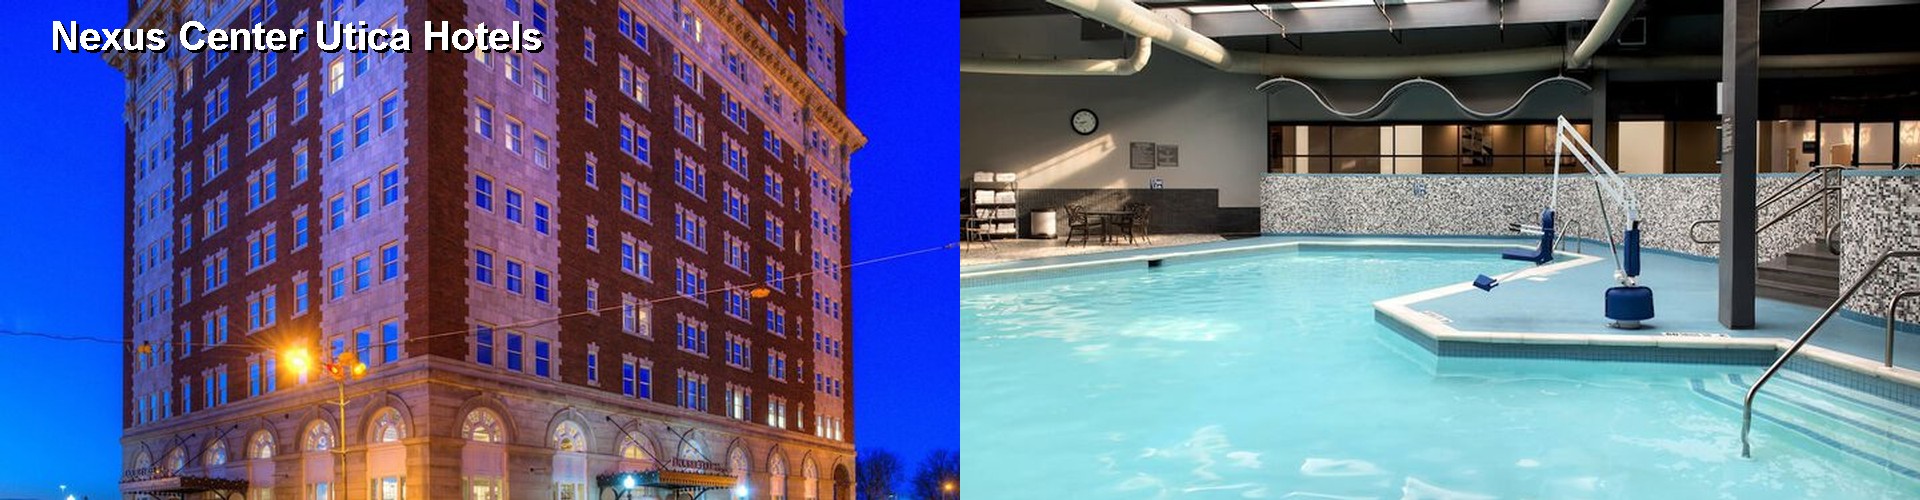 5 Best Hotels near Nexus Center Utica